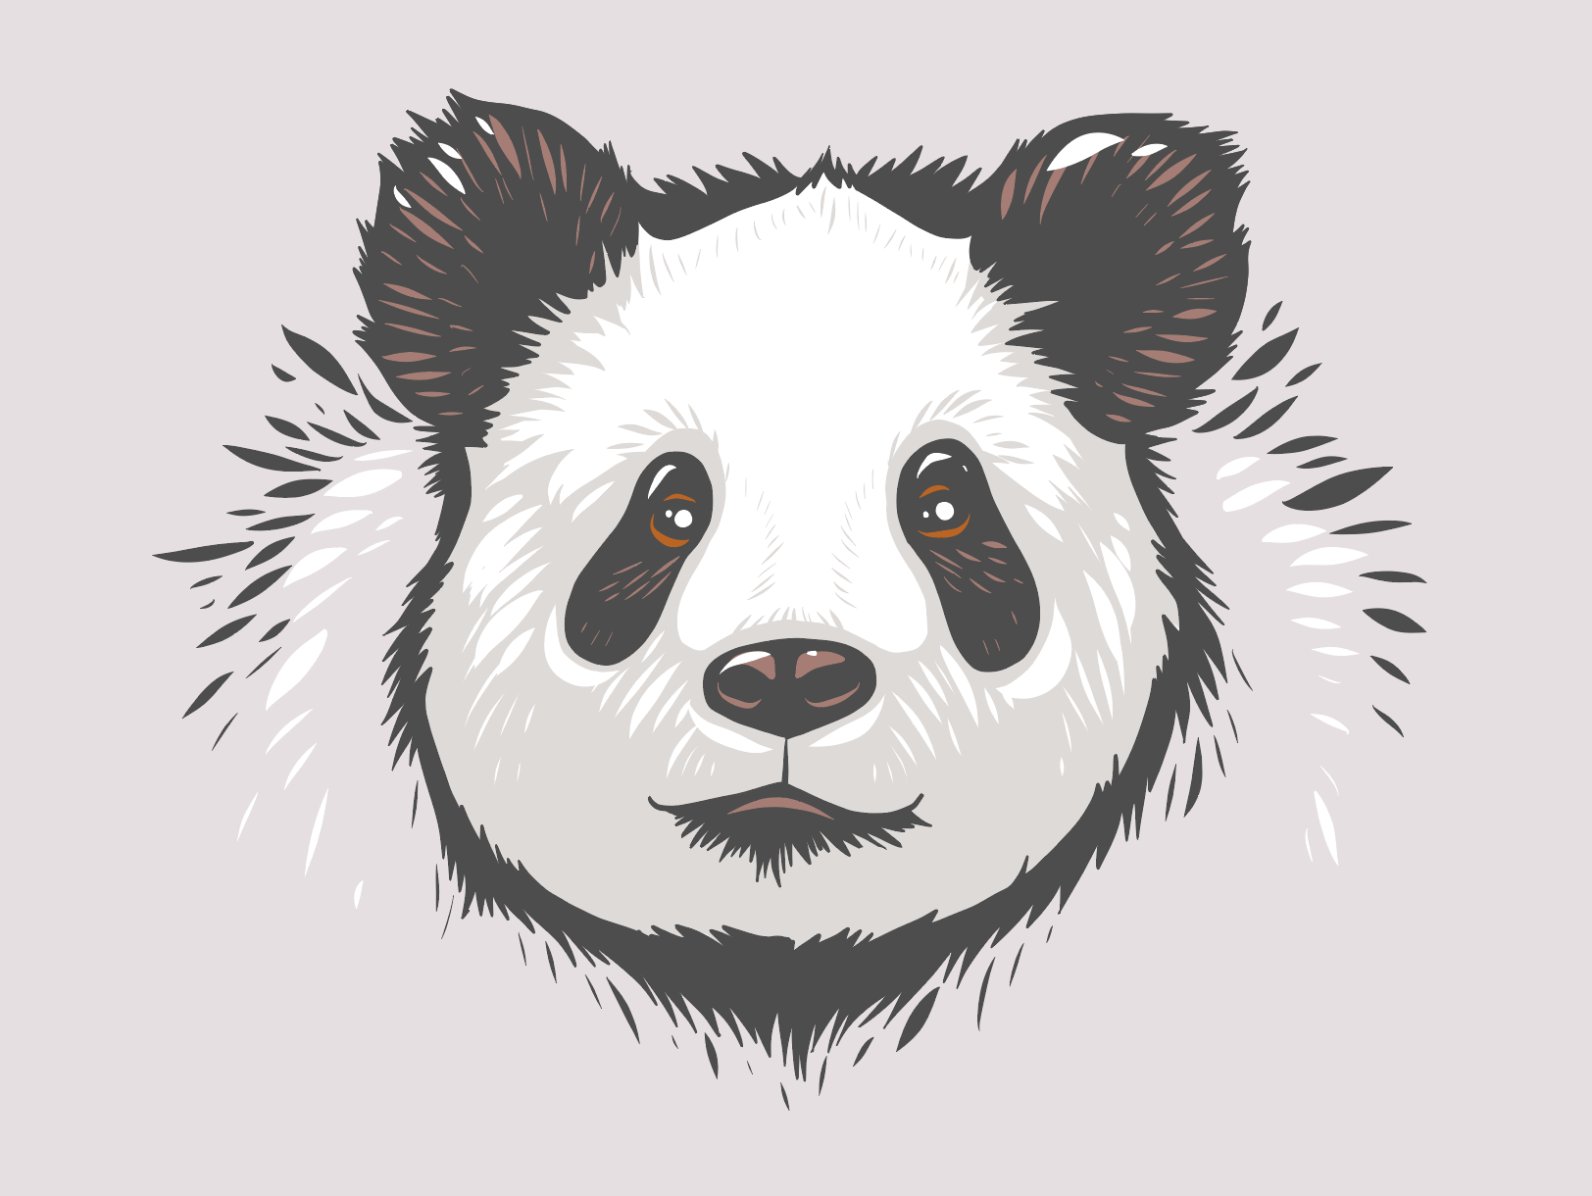 Panda Drawing Face stock vector. Illustration of nature - 86207144